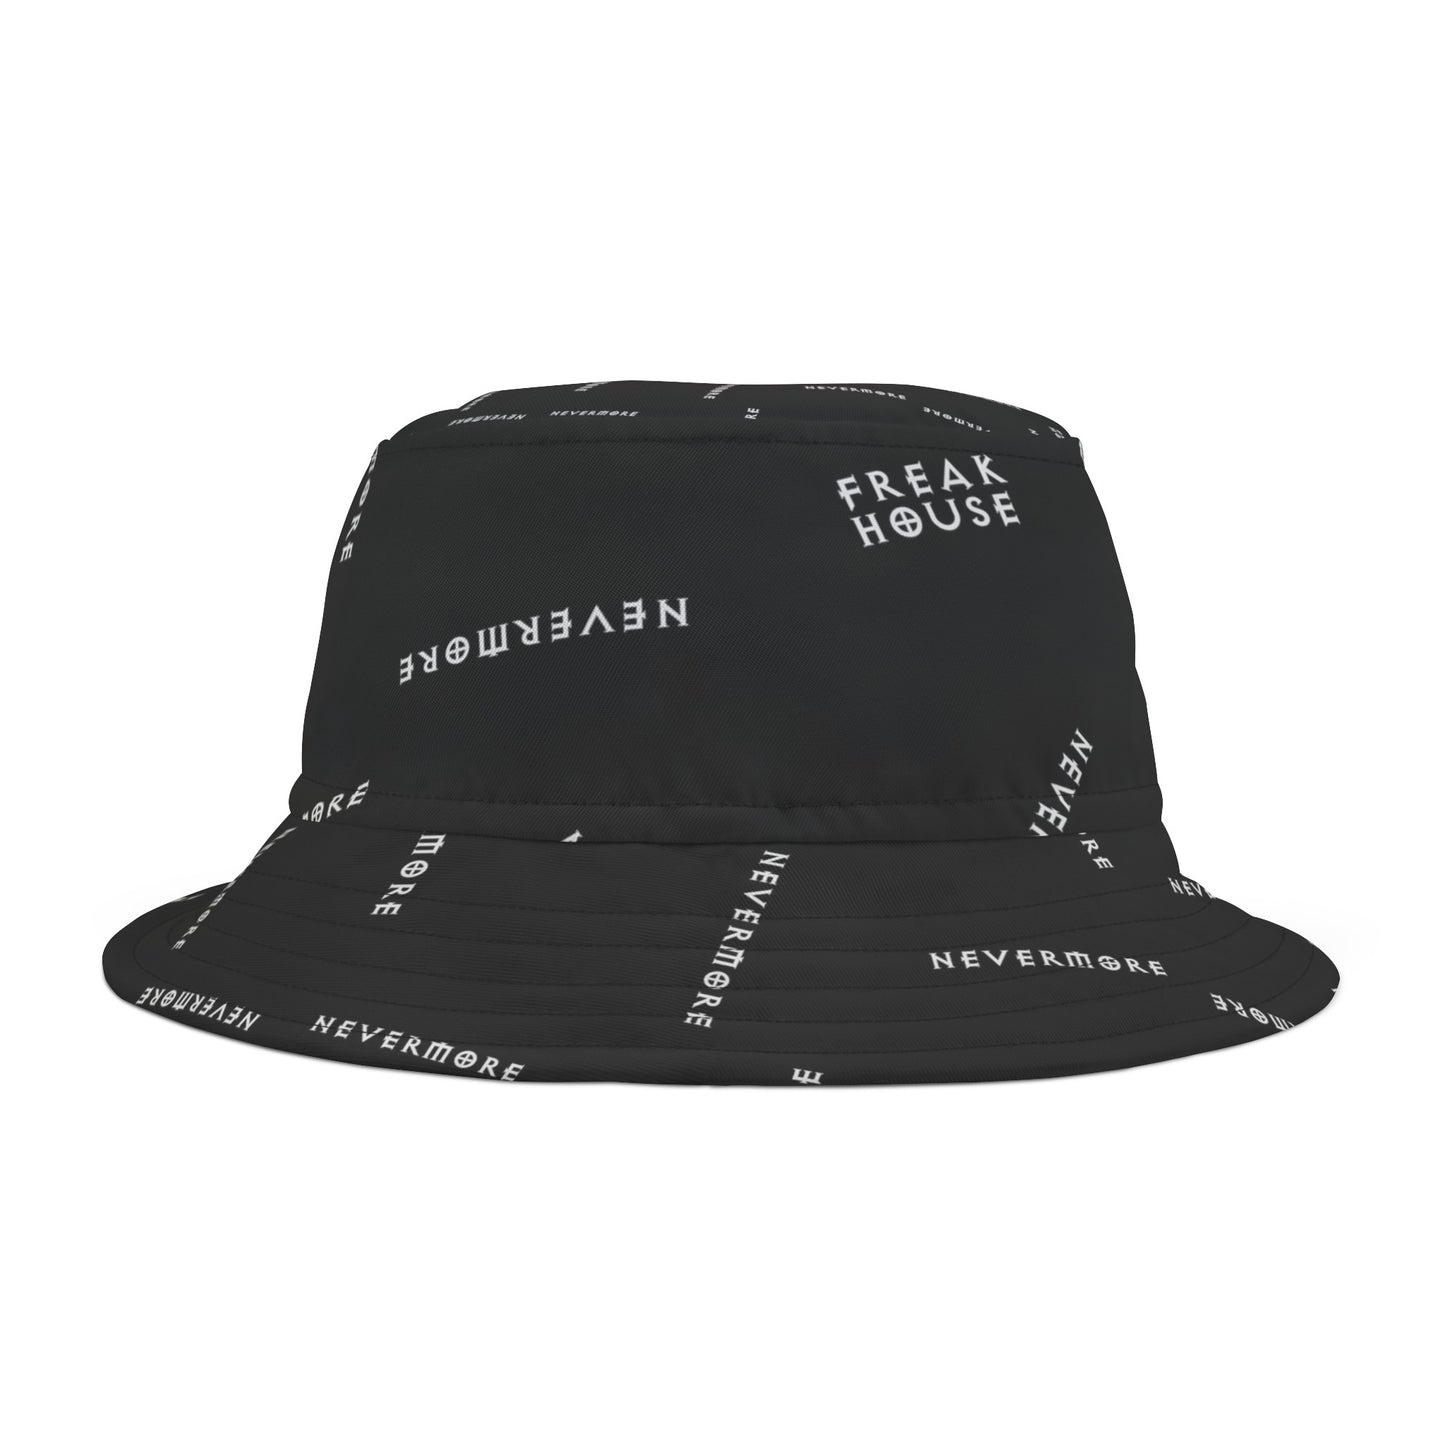 Freak House Nevermore Bucket Hat, Black